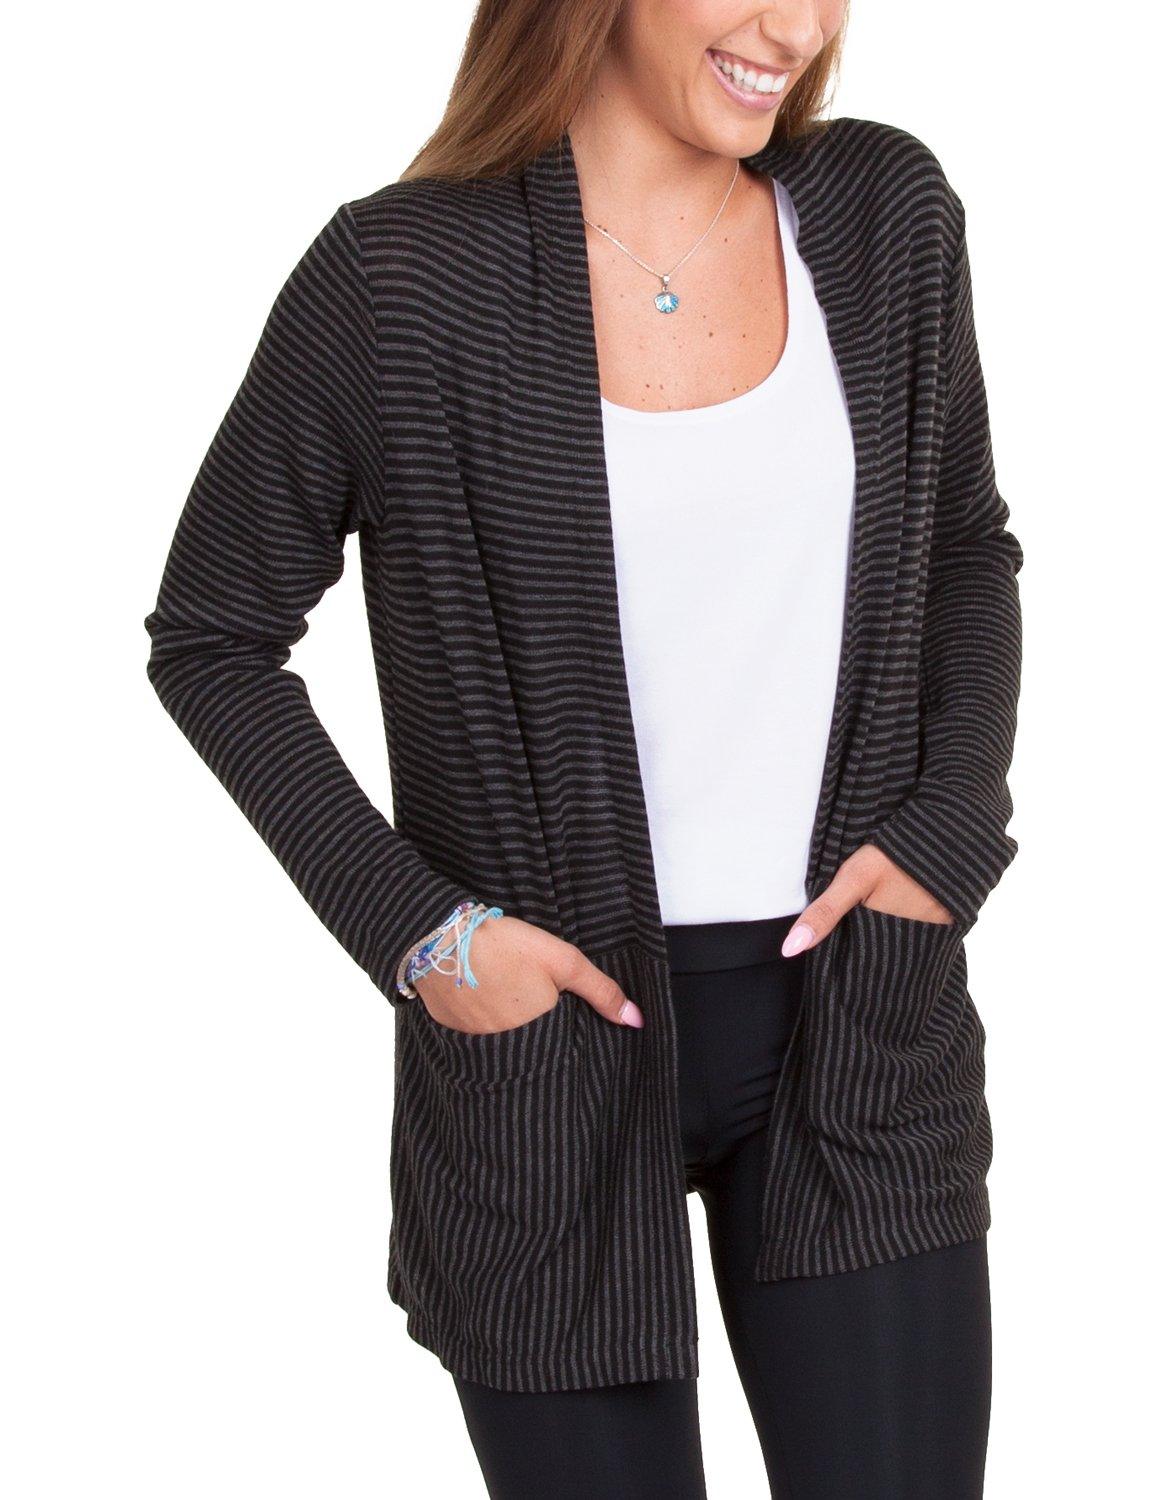 Jalie 3677 - HÉLÈNE - Shawl Collar Cardigan in a Striped Sweater Knit